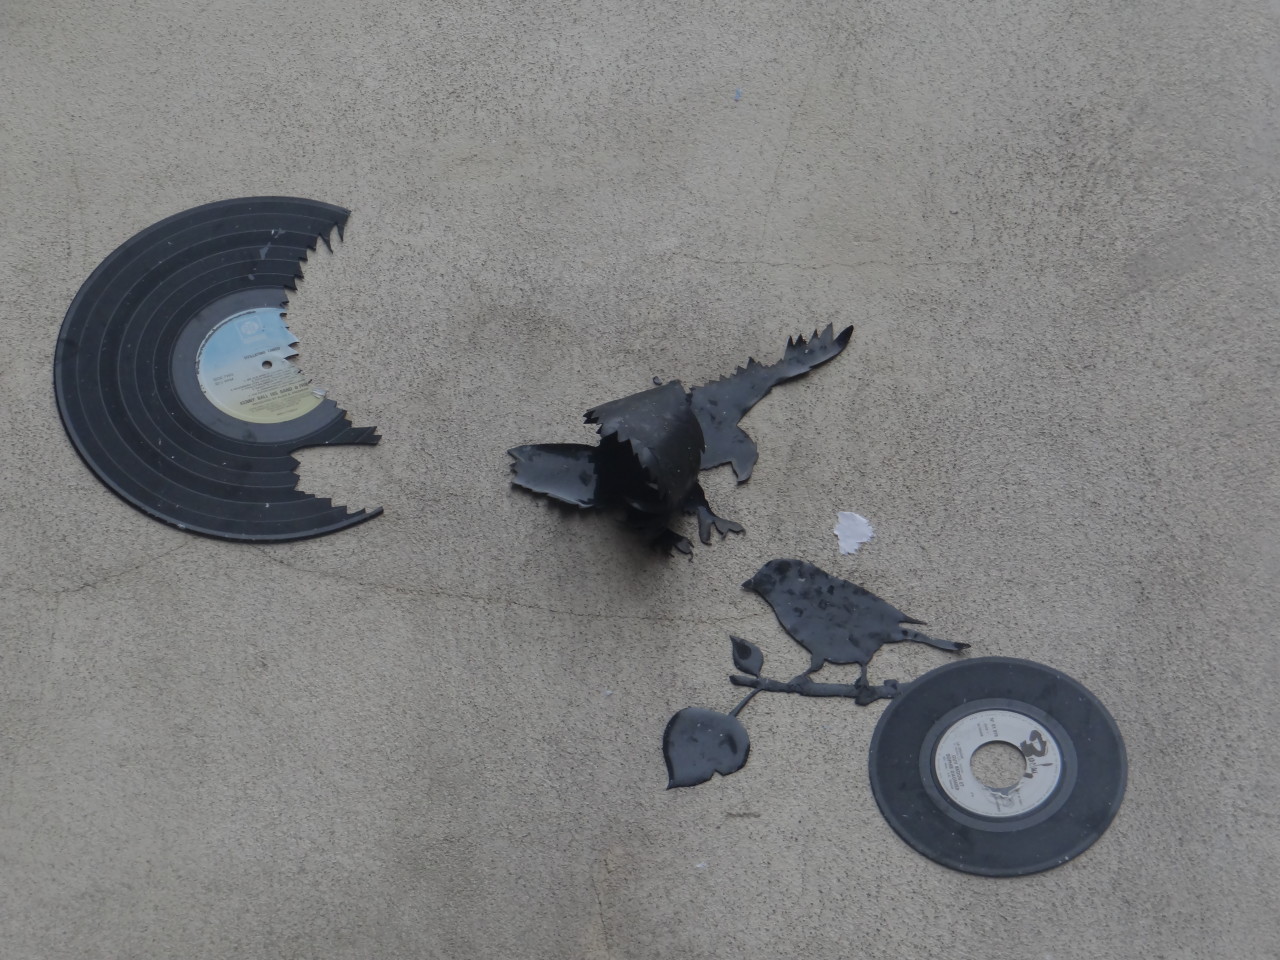 Street art in Paris using recylced materials